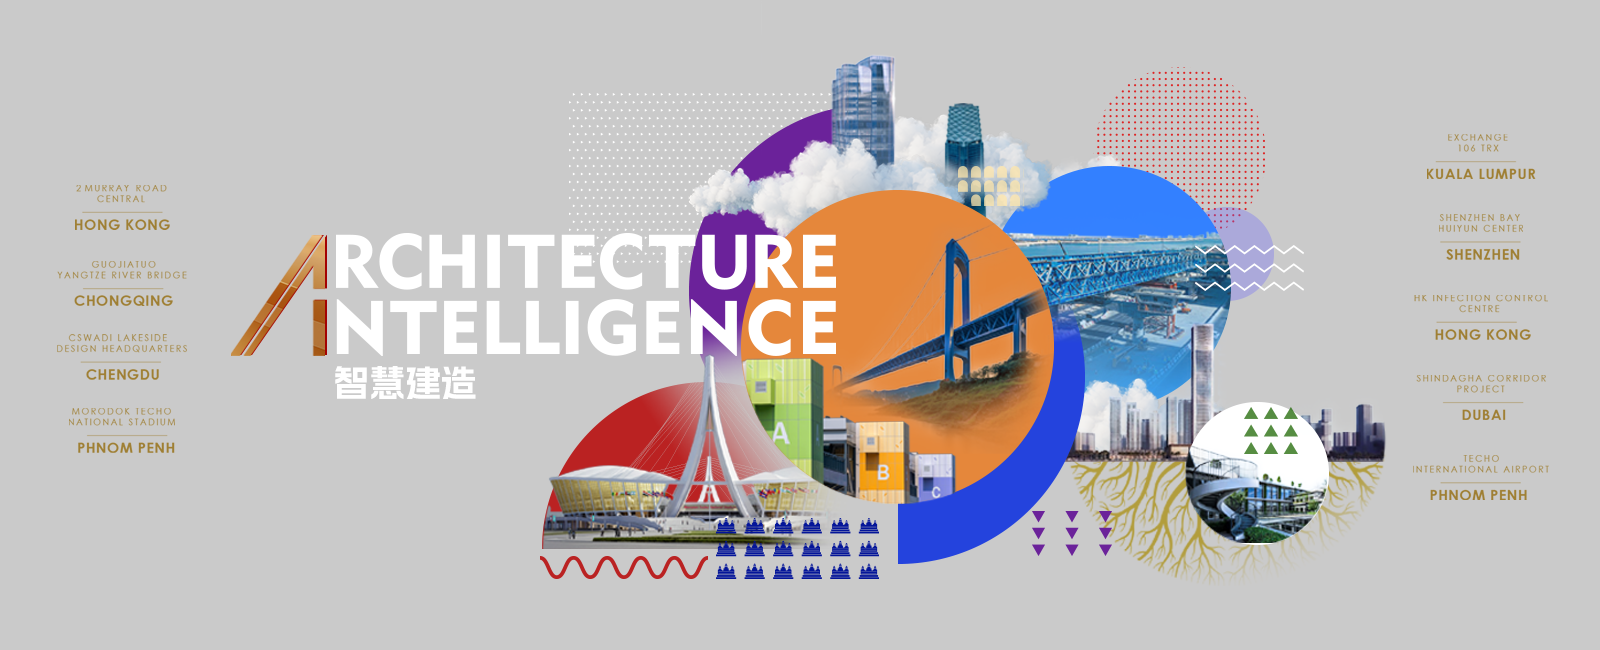 Architecture Intelligence